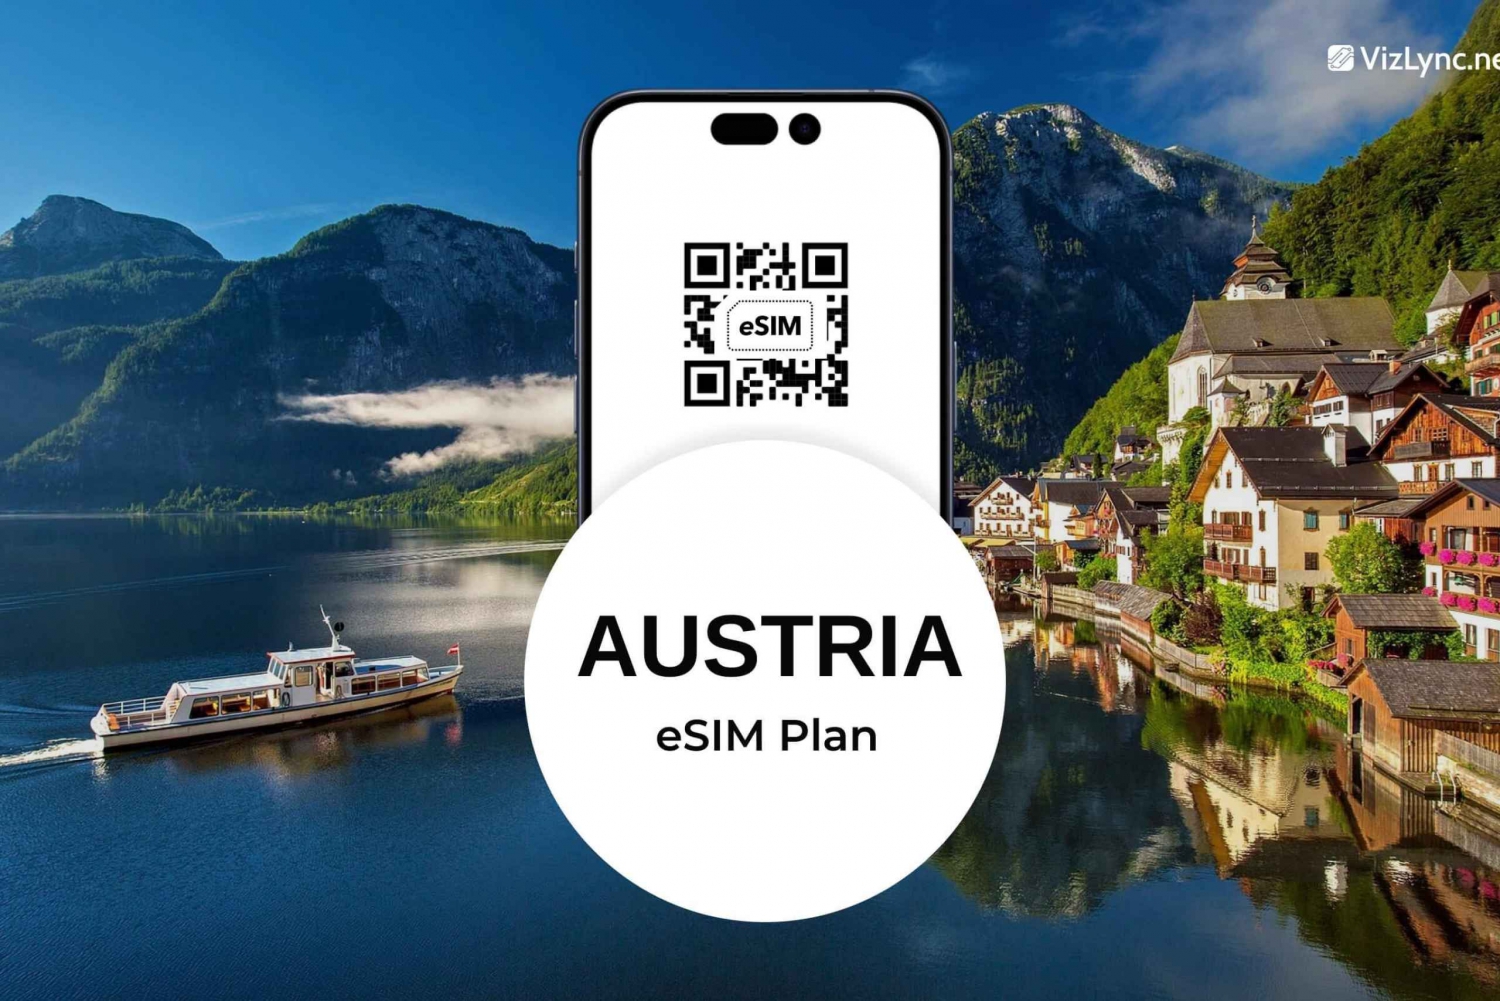 Österrike Travel eSIM-abonnemang med supersnabb mobildata